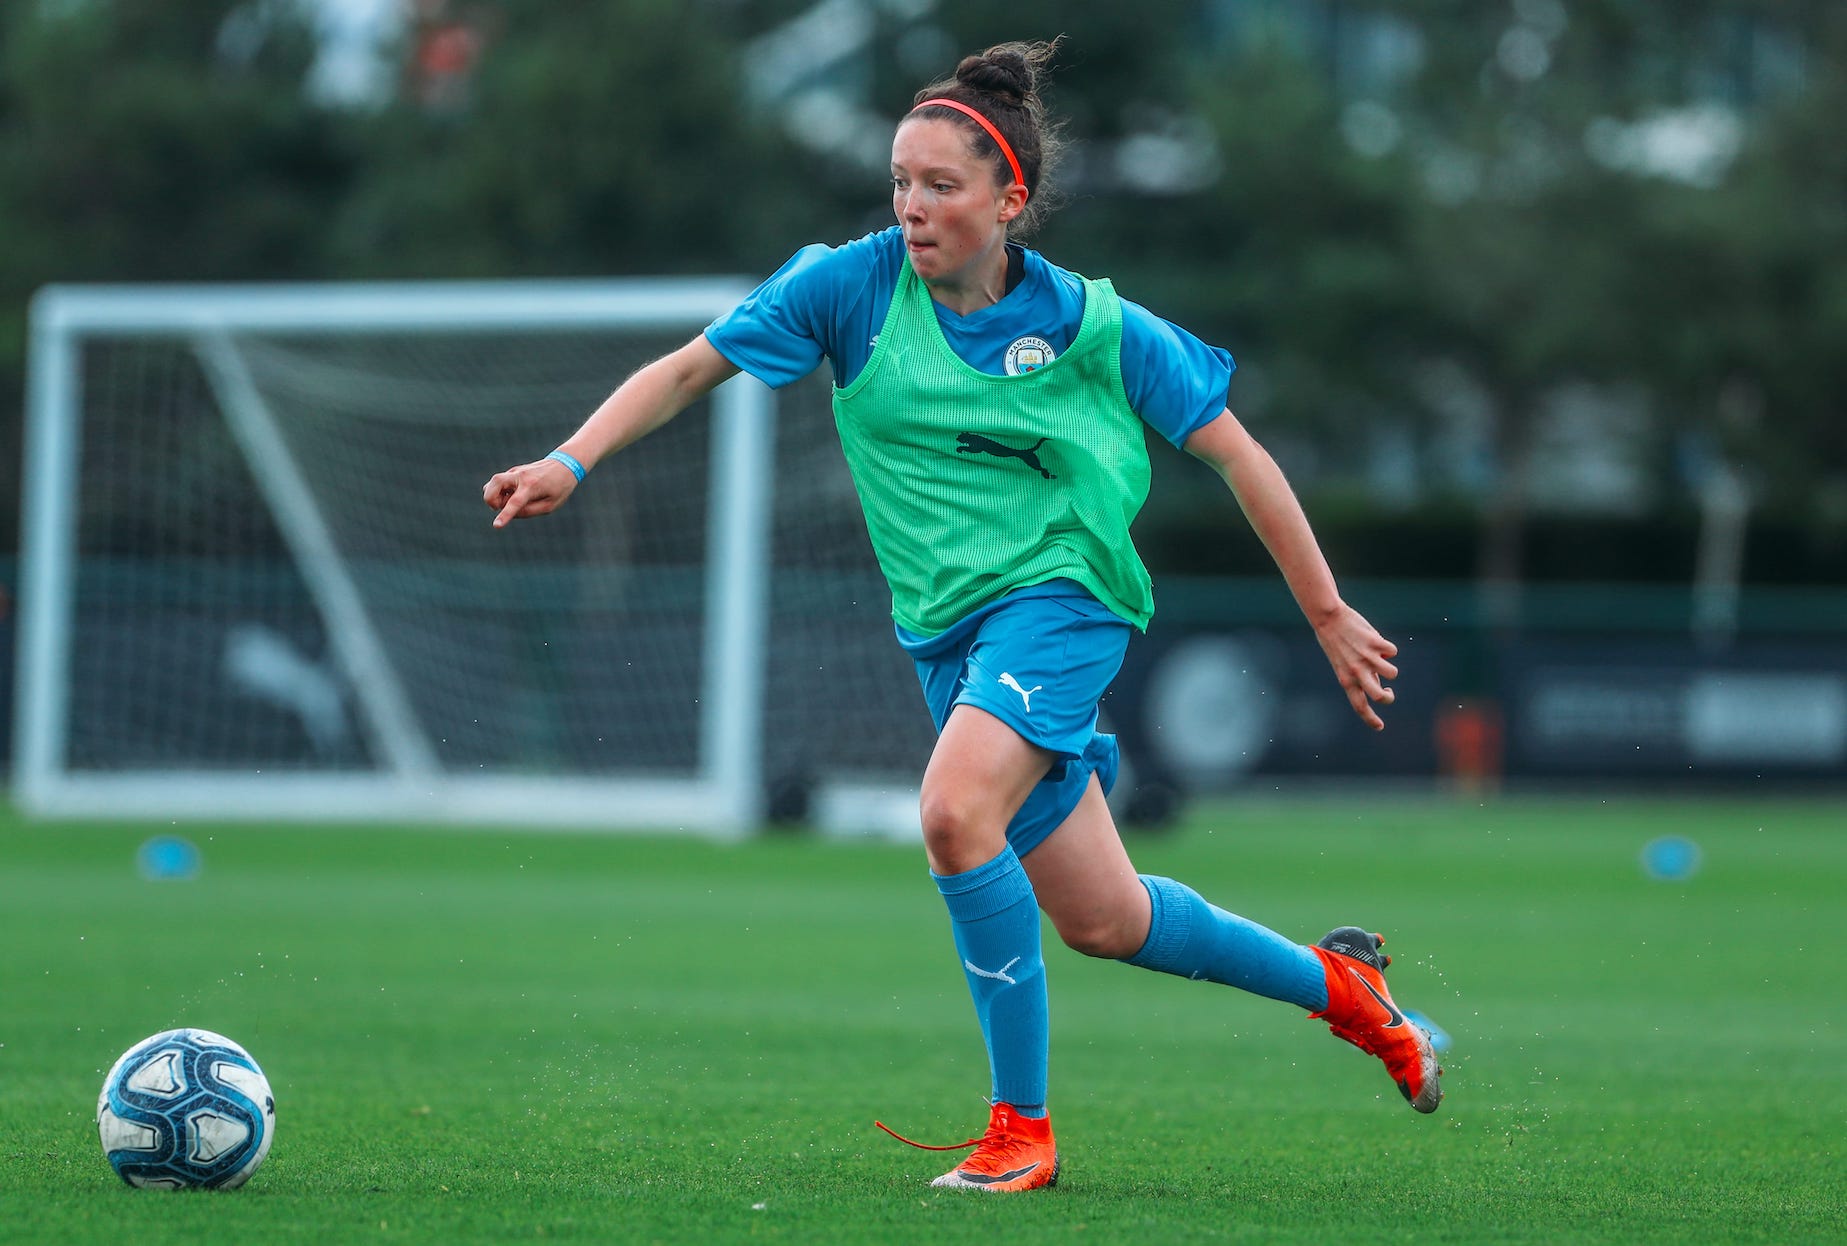 A female footballer running towards a ball. She is wearing a blue, Man City Football School kit and a green bib.